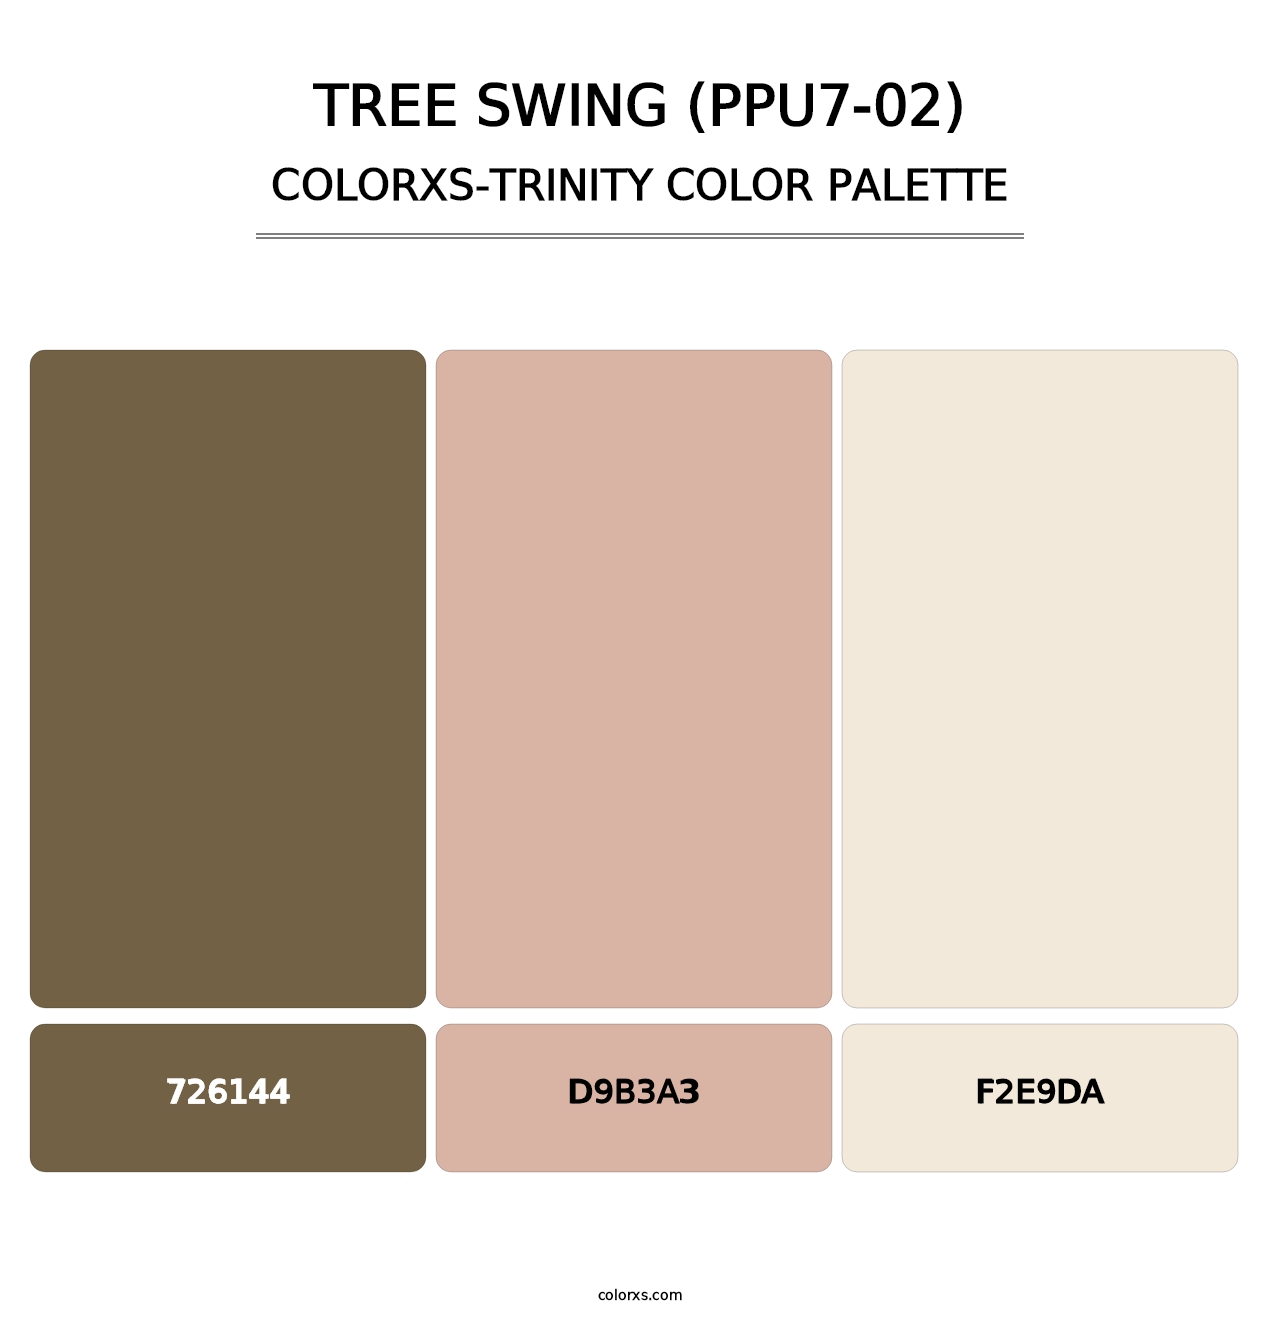 Tree Swing (PPU7-02) - Colorxs Trinity Palette